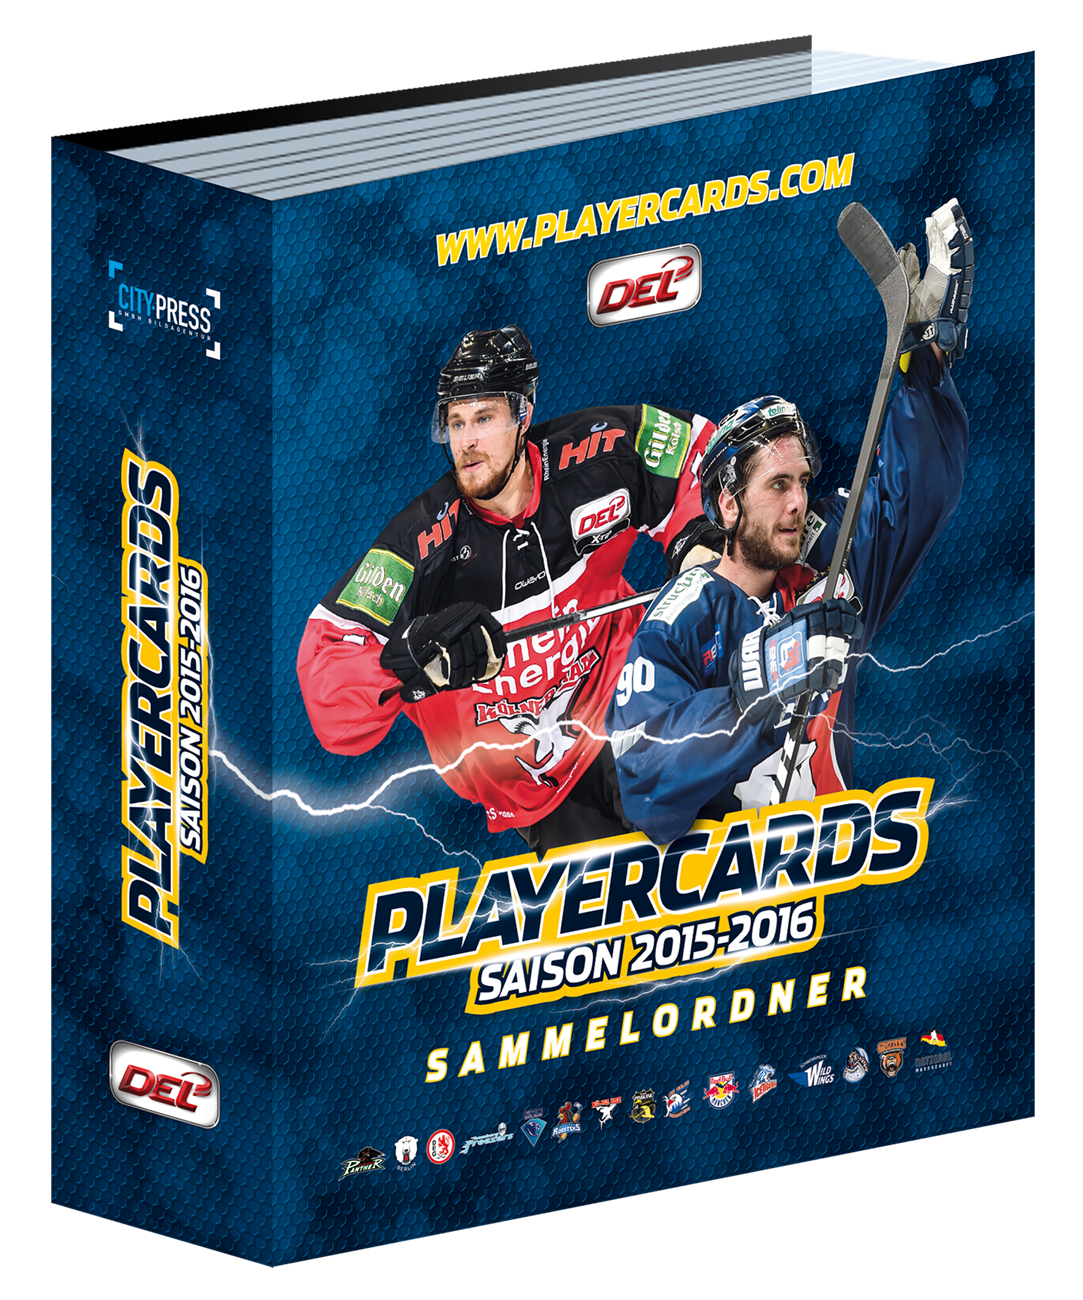 DEL Playercards Sammelordner - 2015/2016